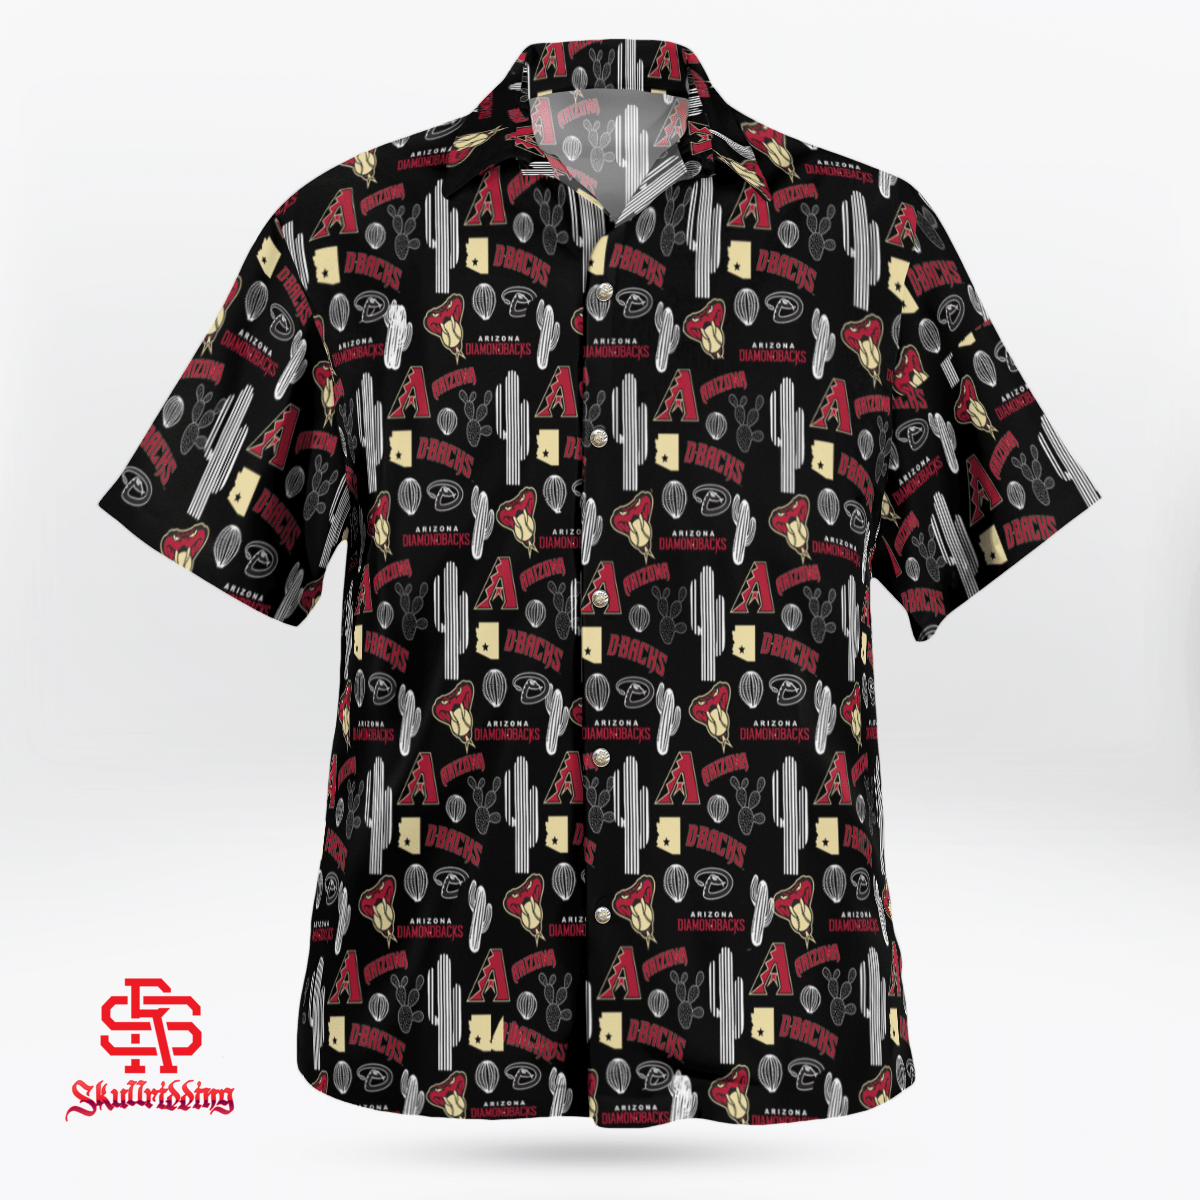 Diamondbacks' promotional schedule includes Father's Day Hawaiian shirt